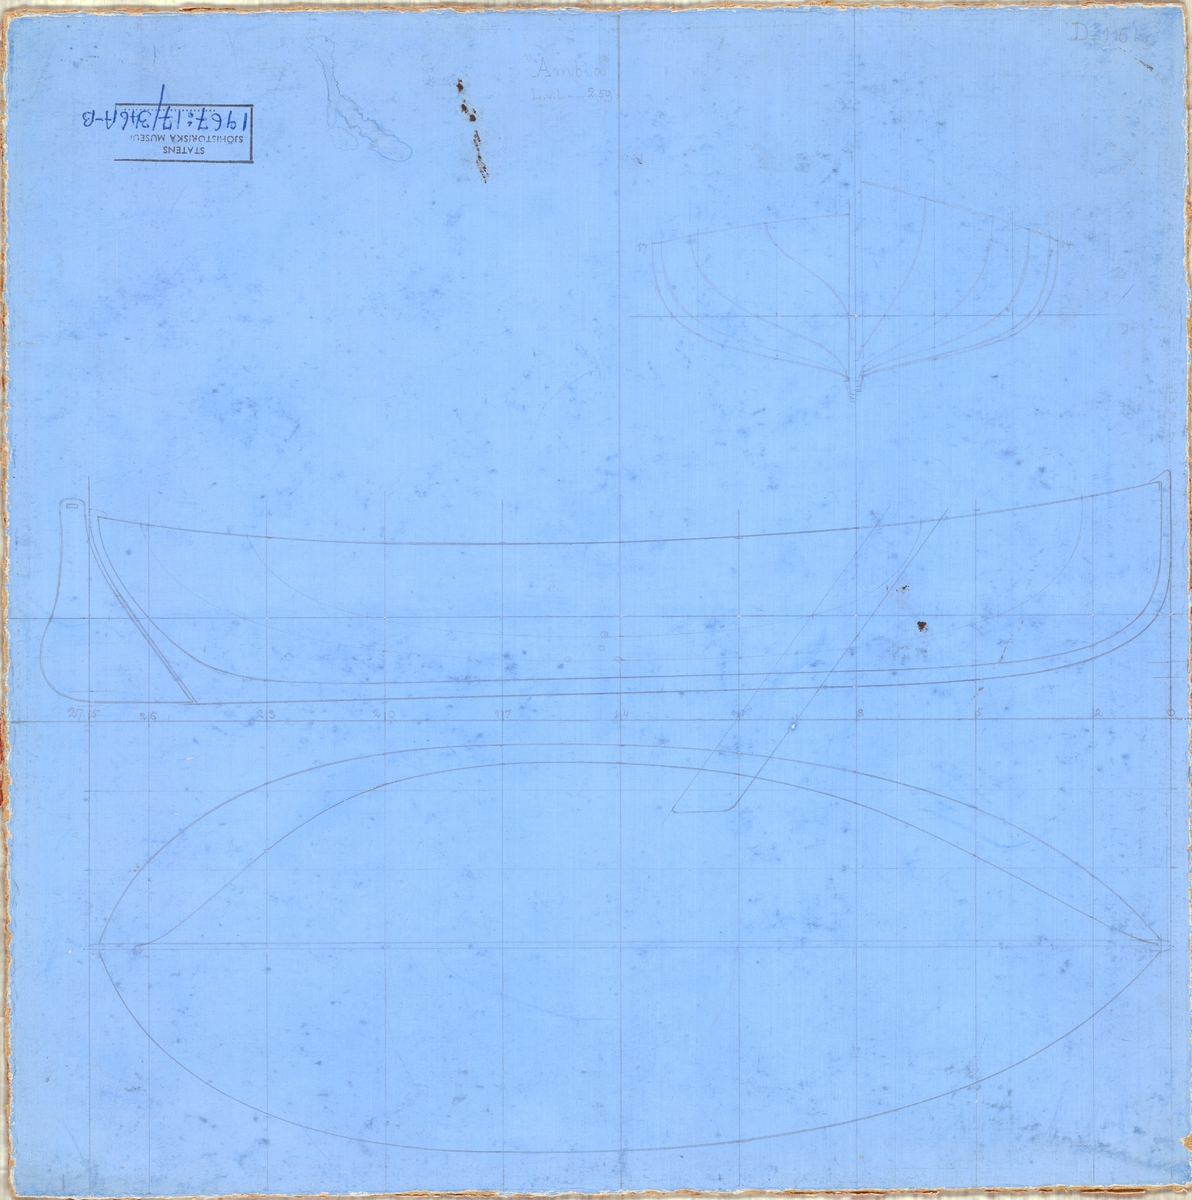 spetsgattad segelkanot Ambia
Skiss; Spantruta, linjeritning